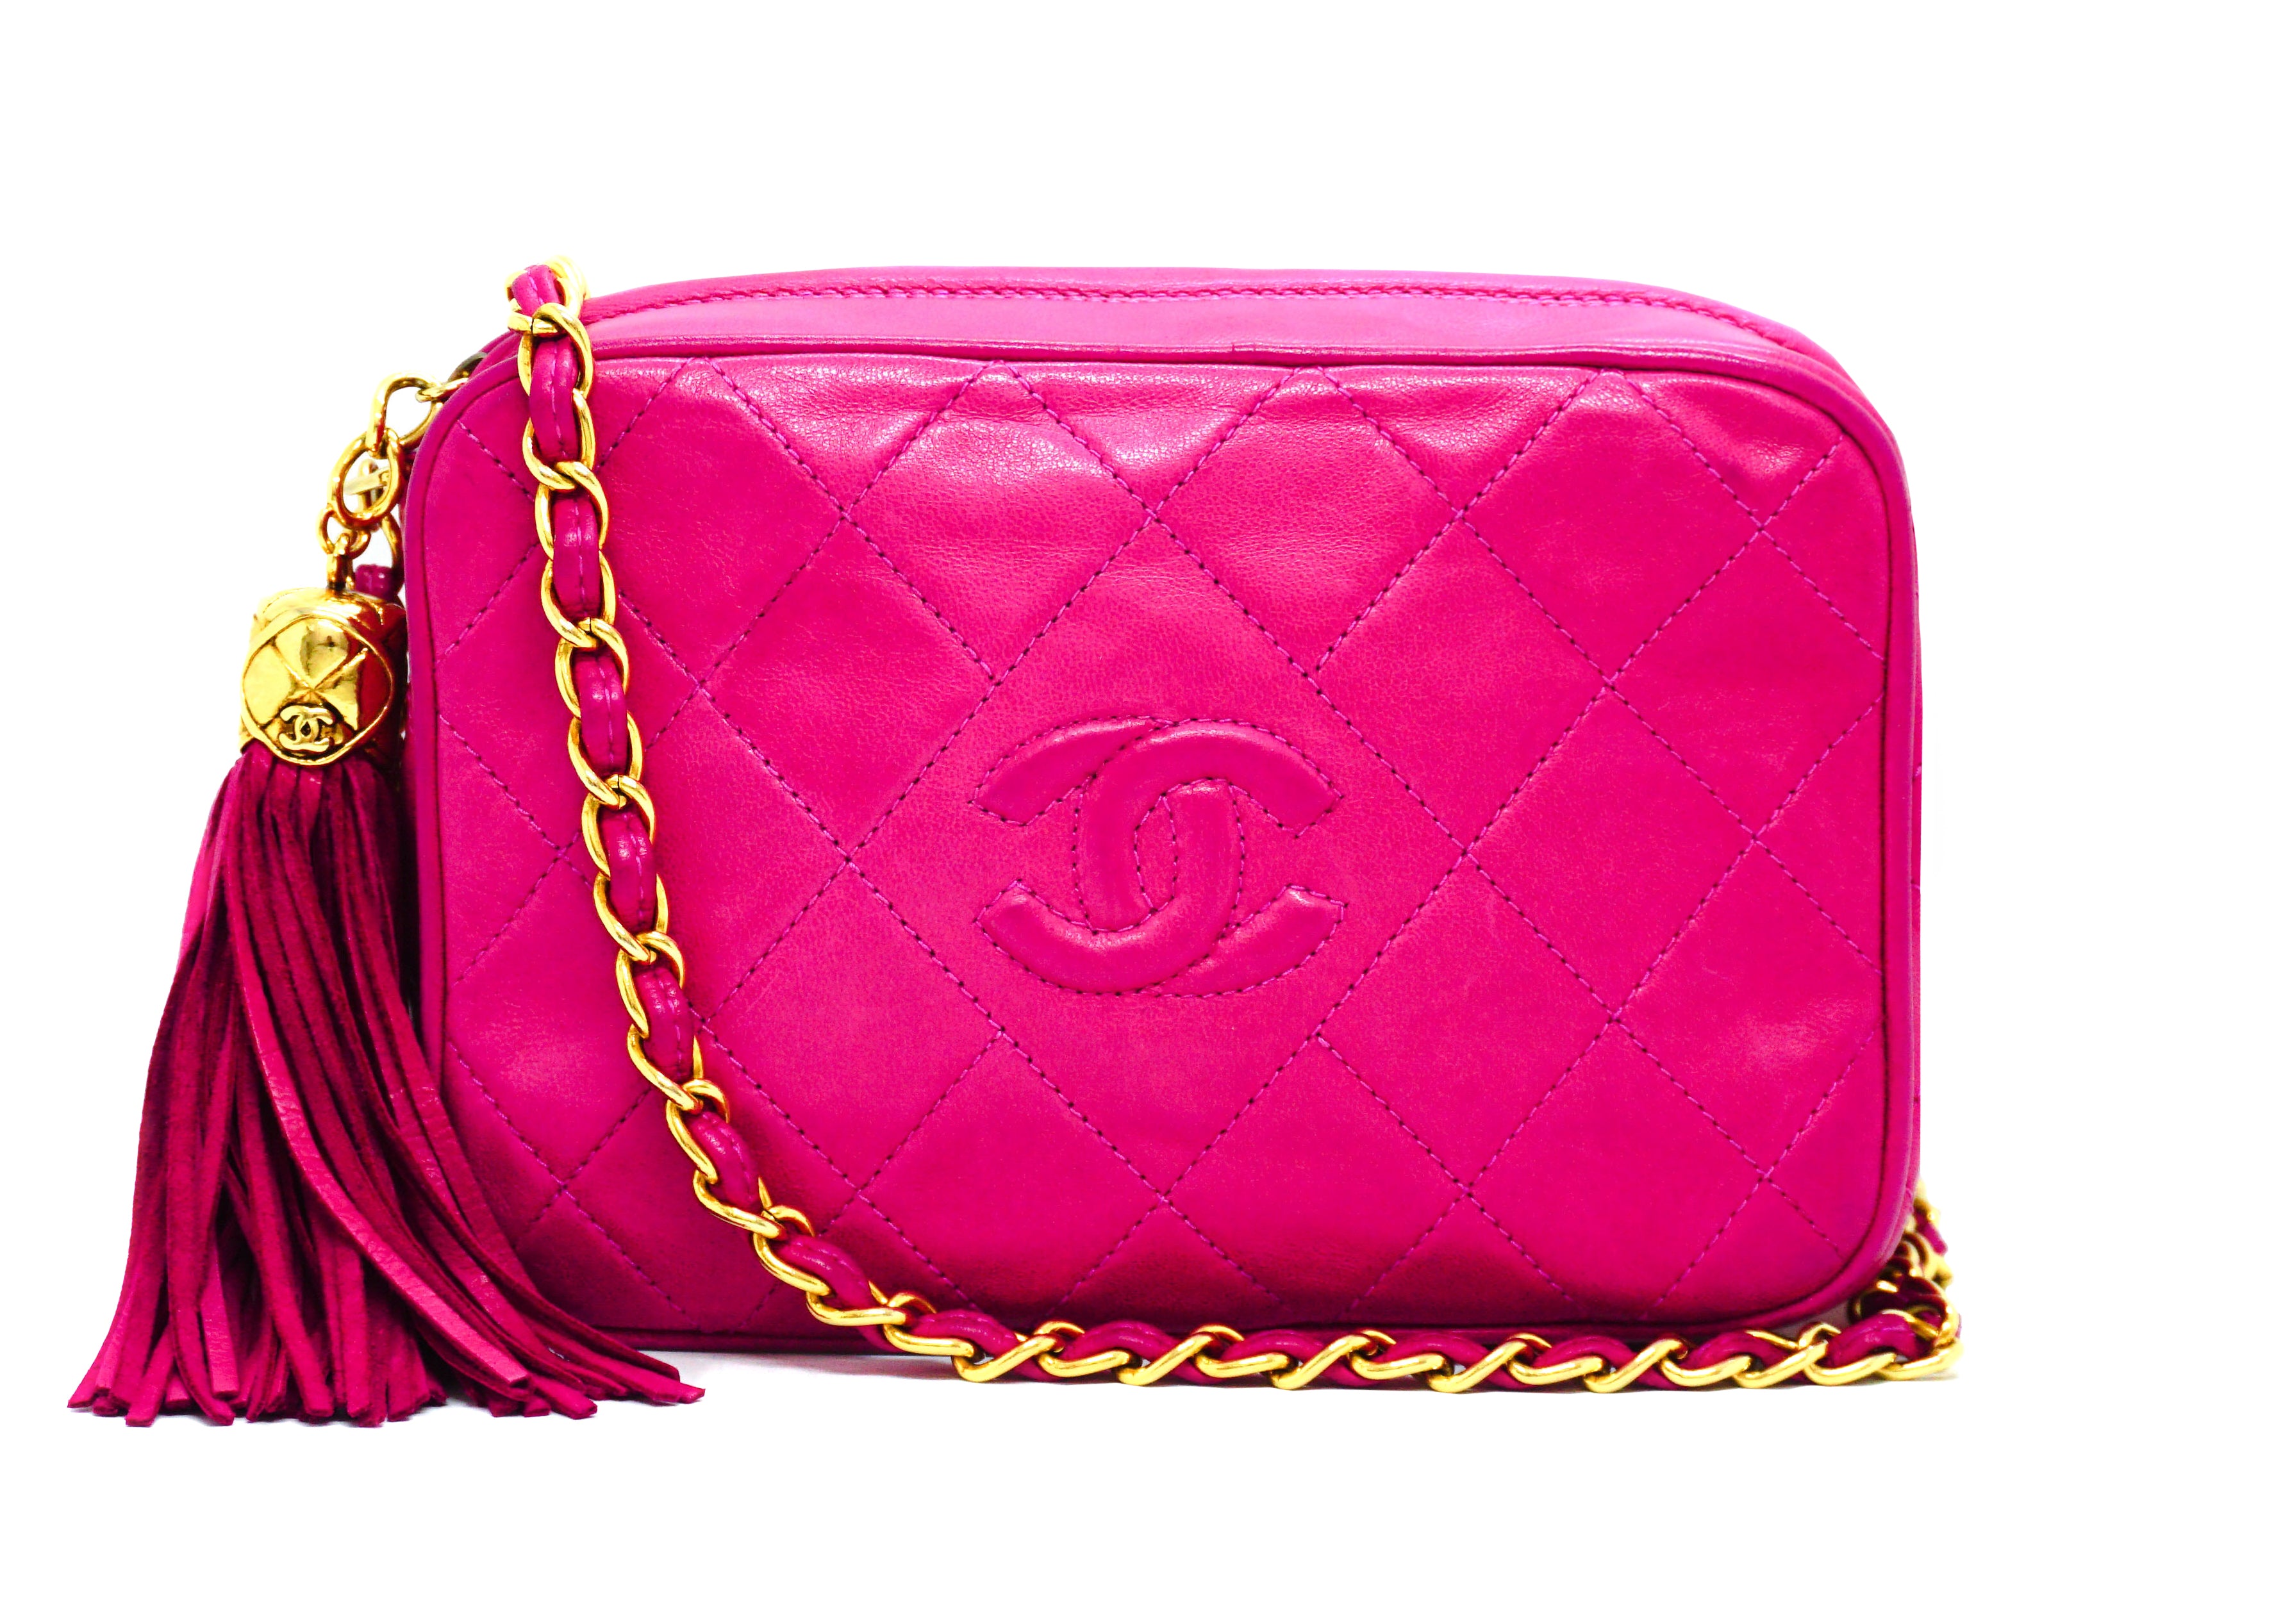 Chanel Vintage Camera Bag Pink Lambskin Gold Hardware – Coco Approved Studio